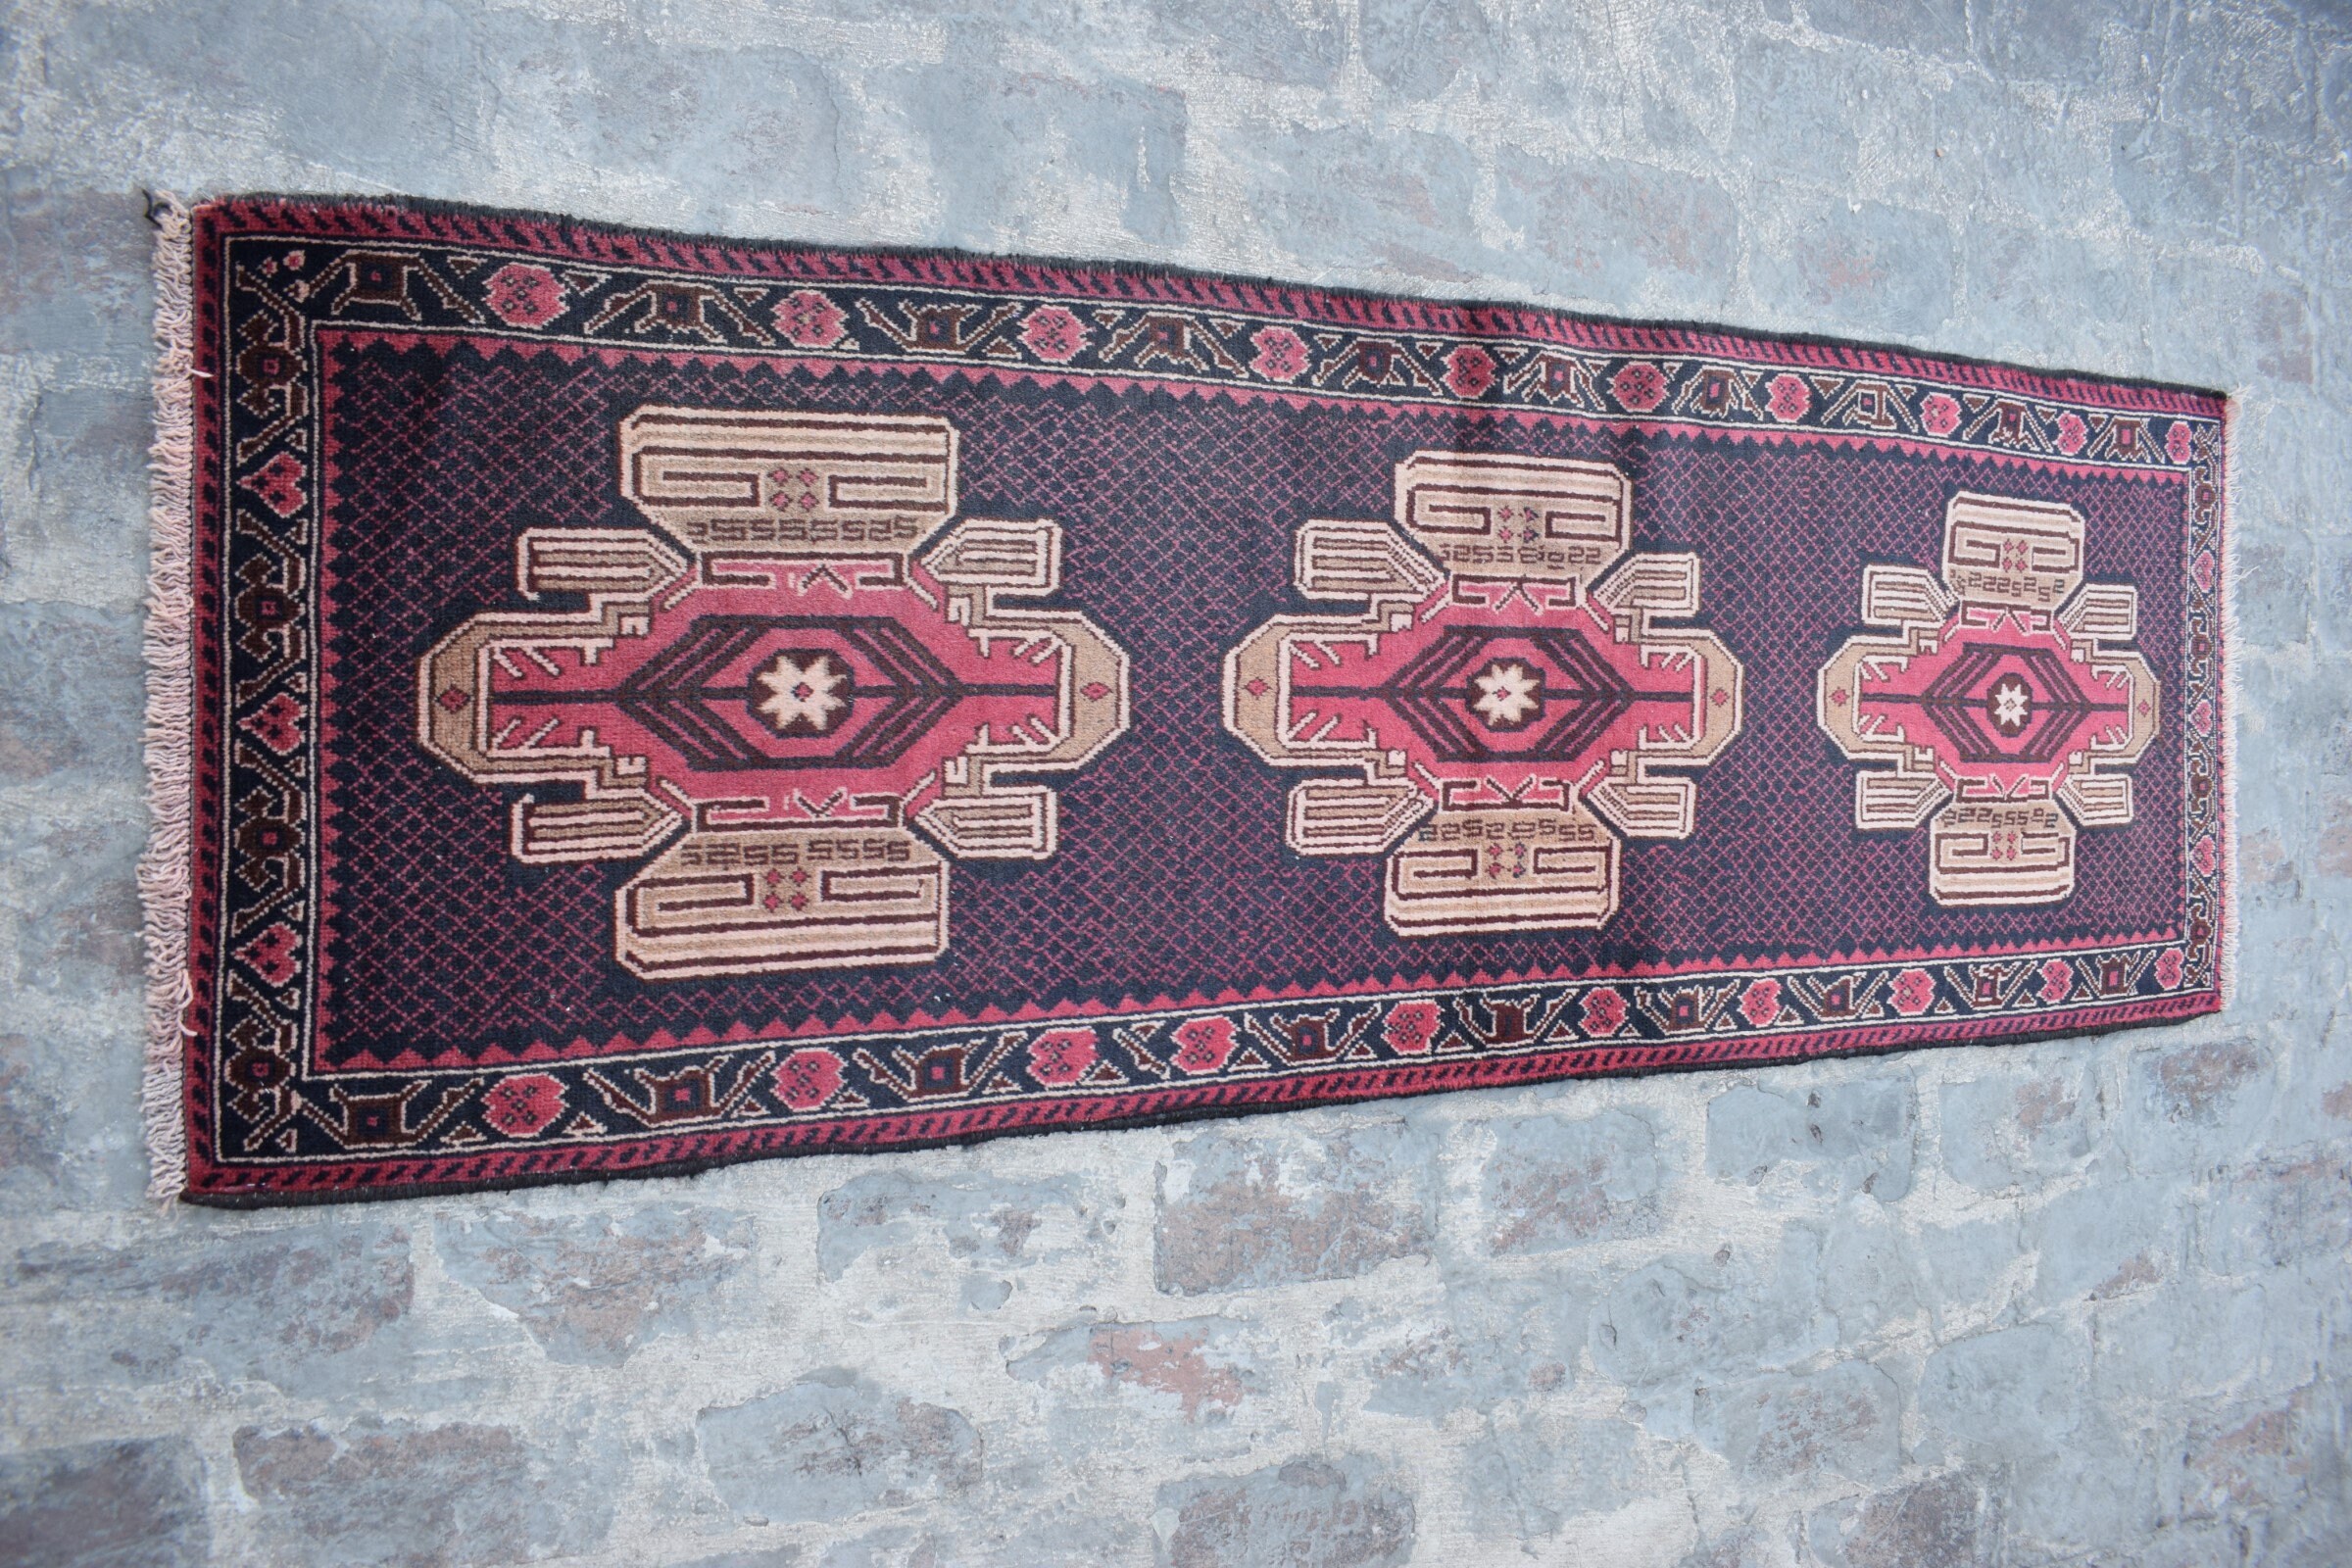 size 150 cm x 94 cm birthday gift Super  Hand made class Afghan loin rug